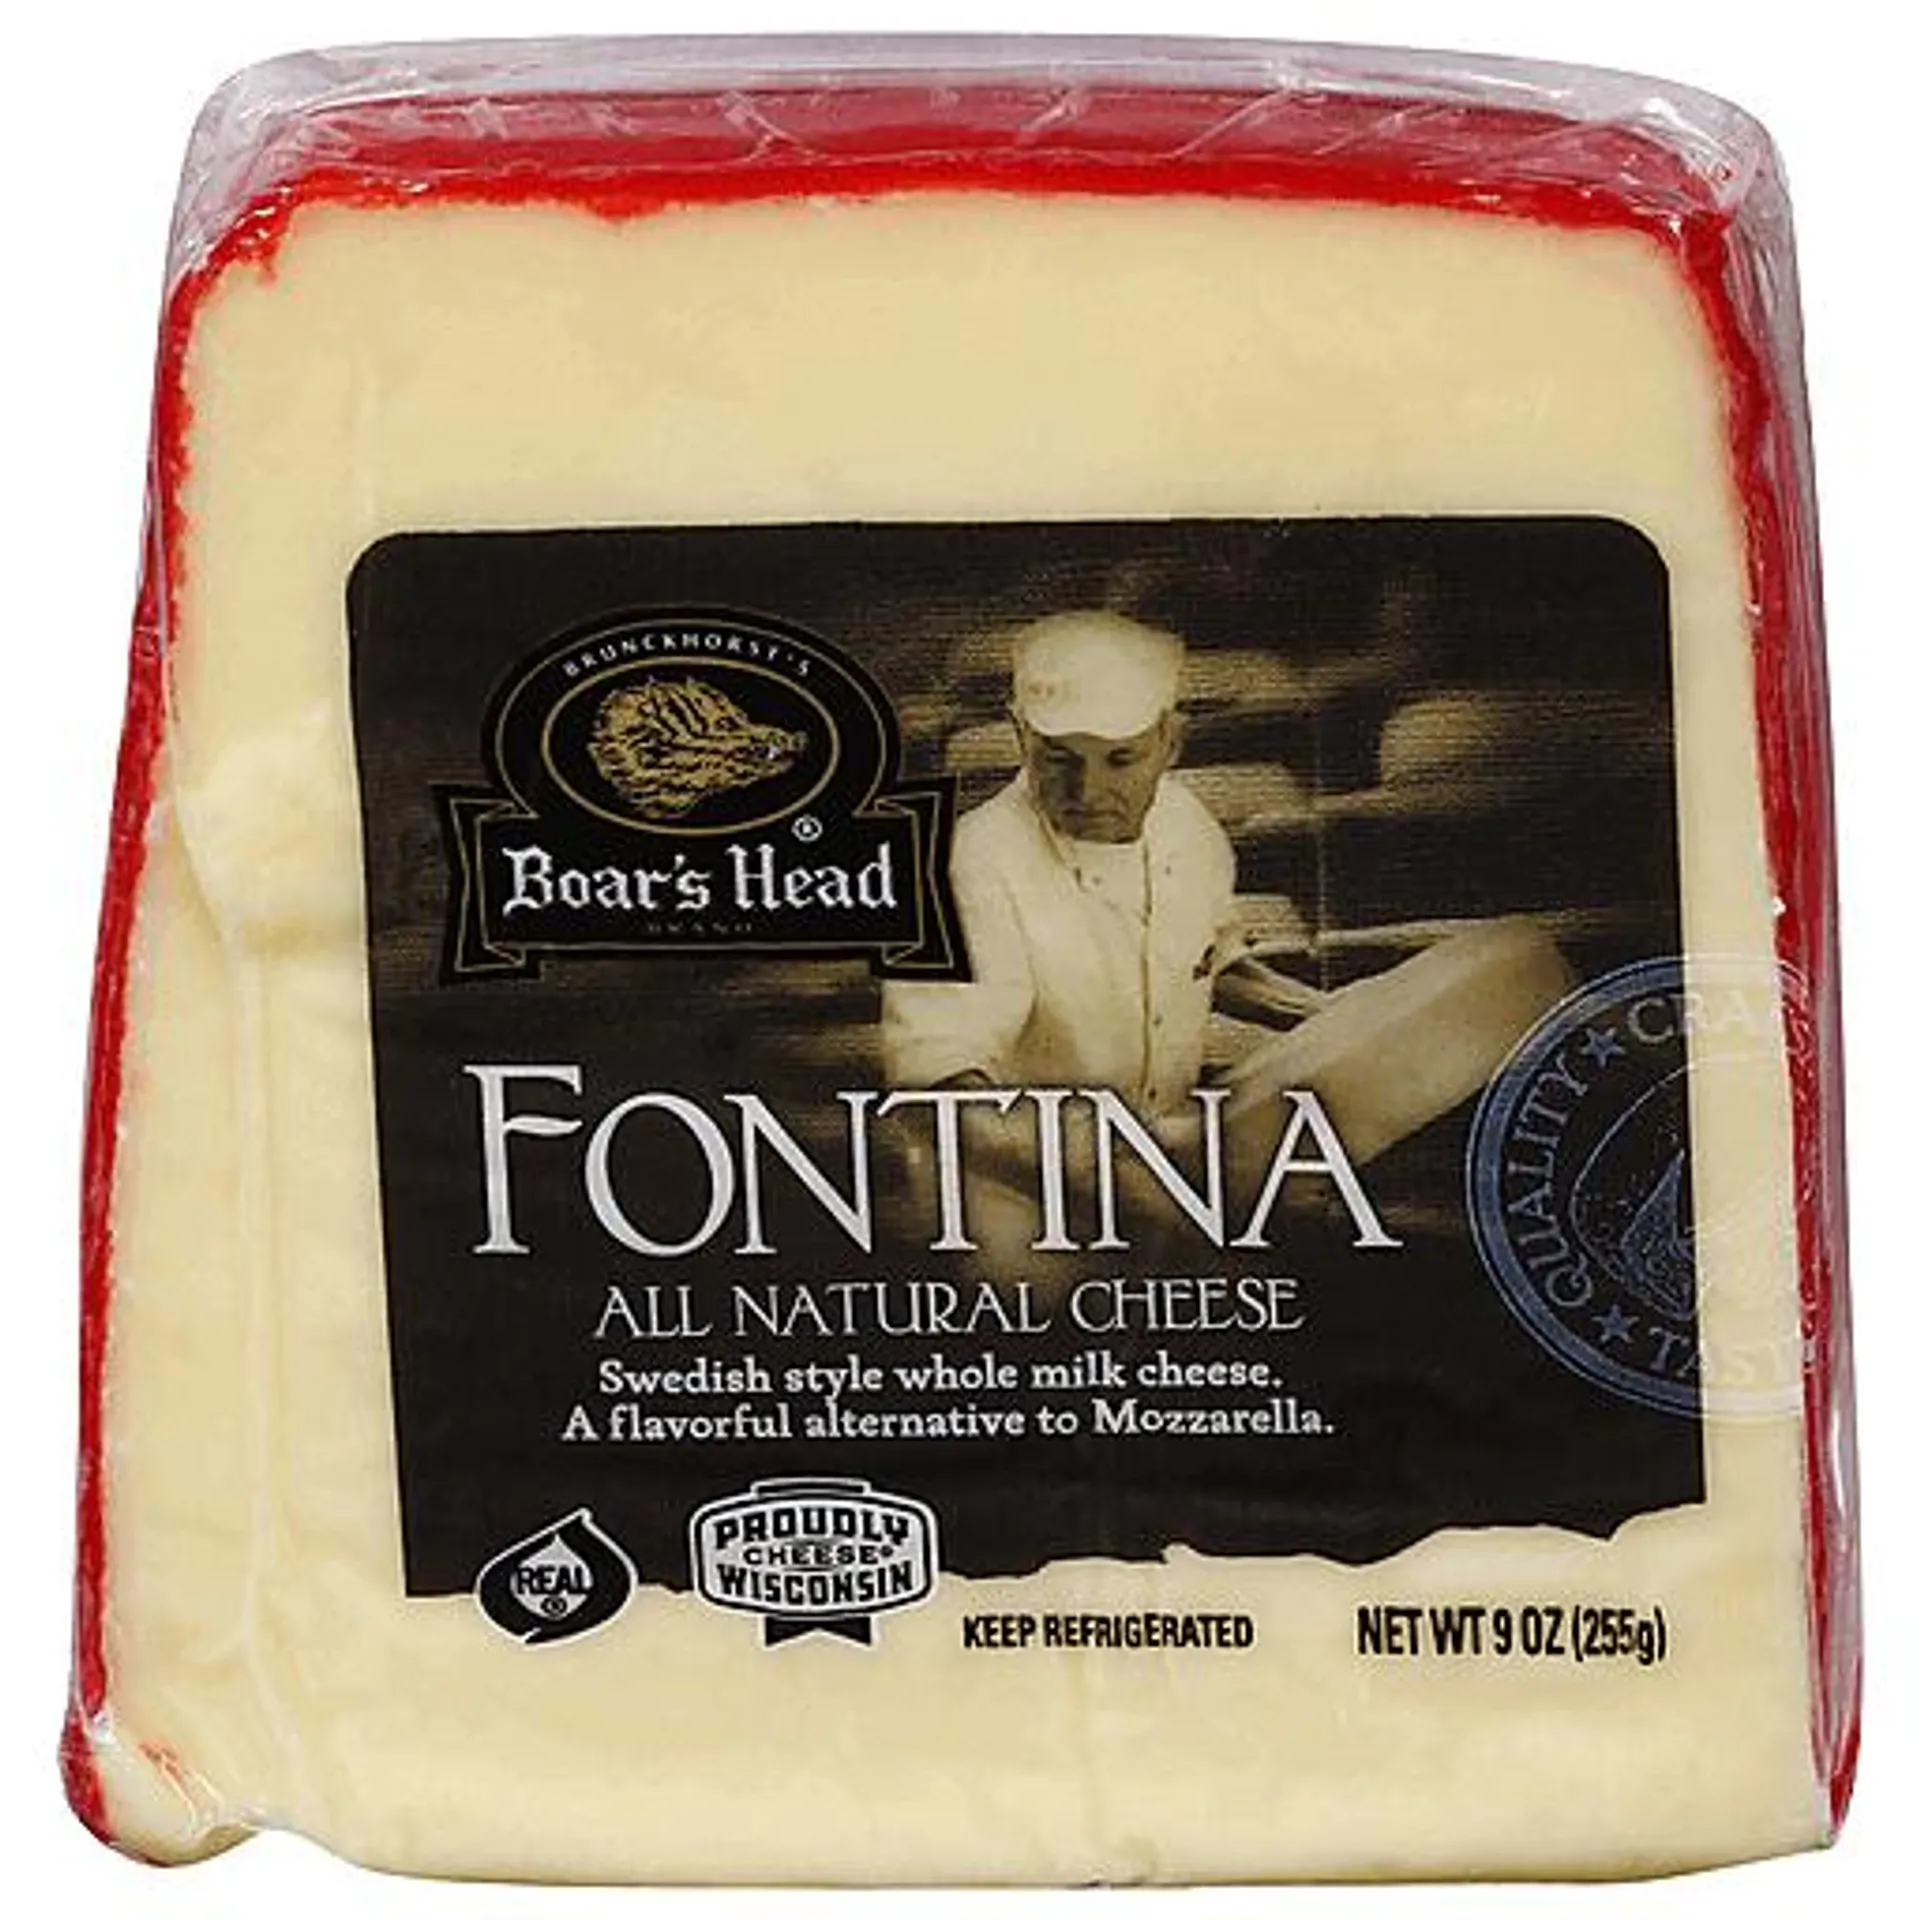 Boar's Head Fontina Cheese 9 oz